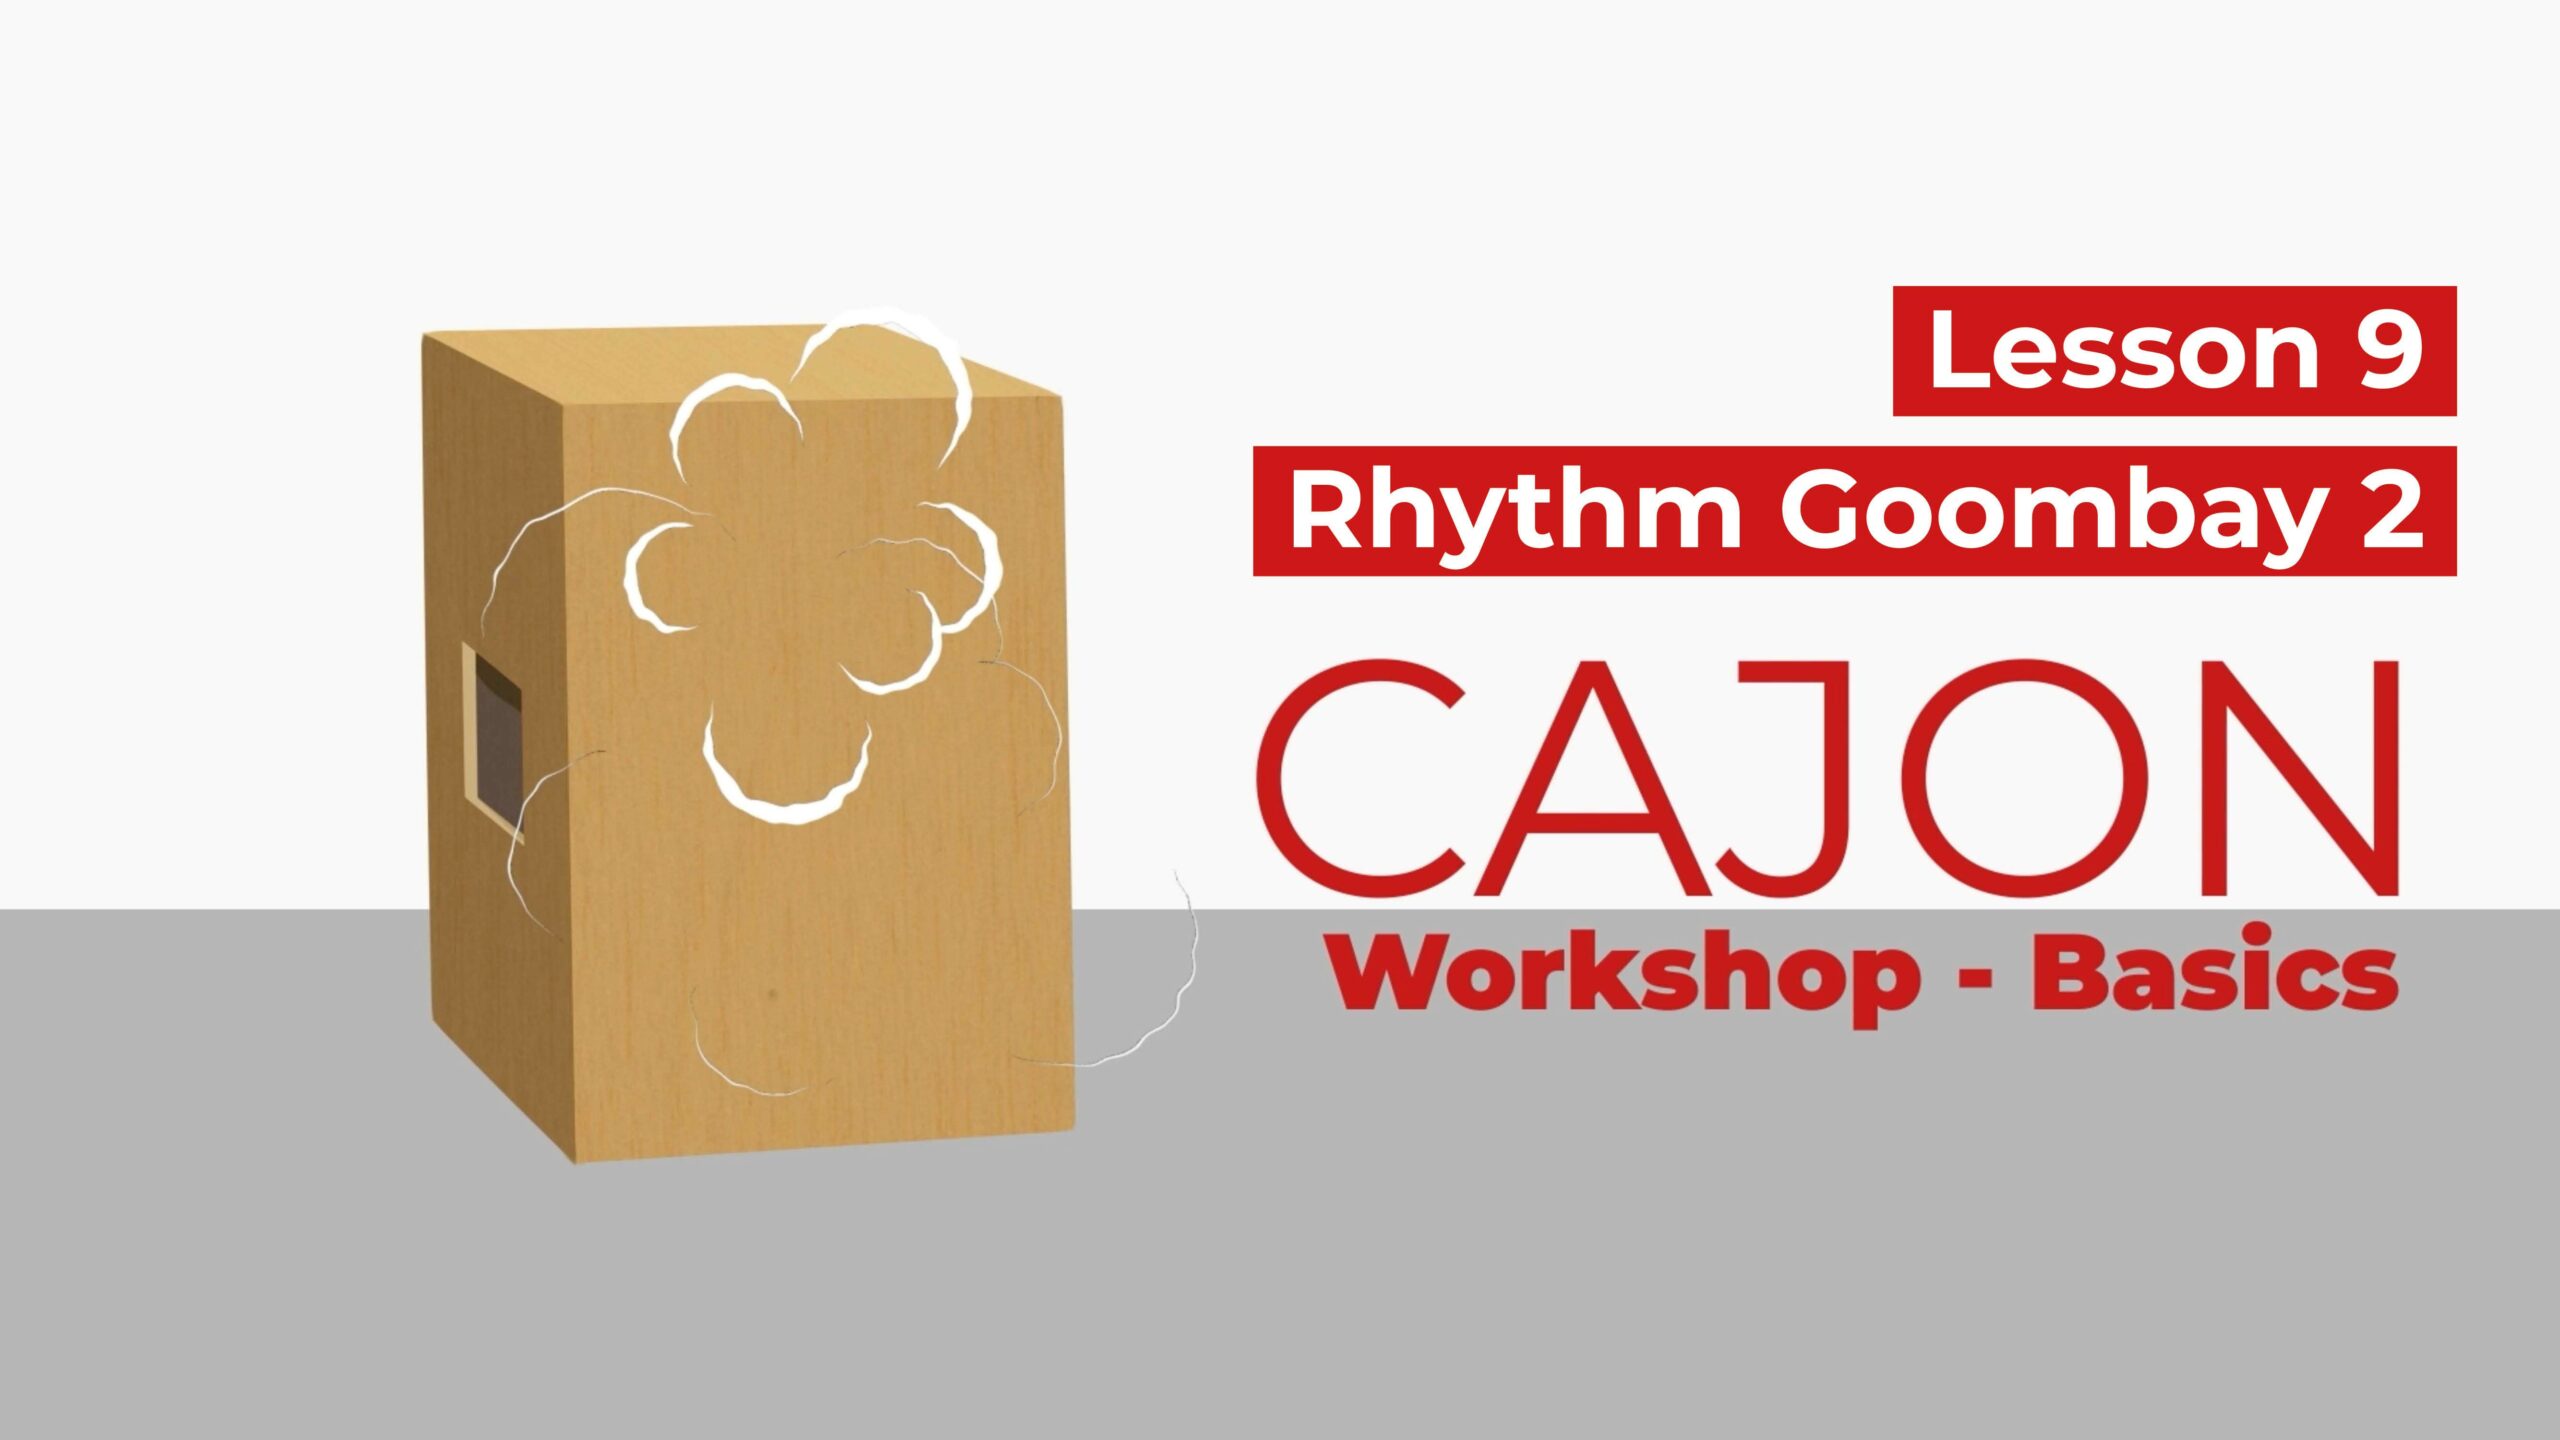 Lesson 9 - Rhythm Goombay 2